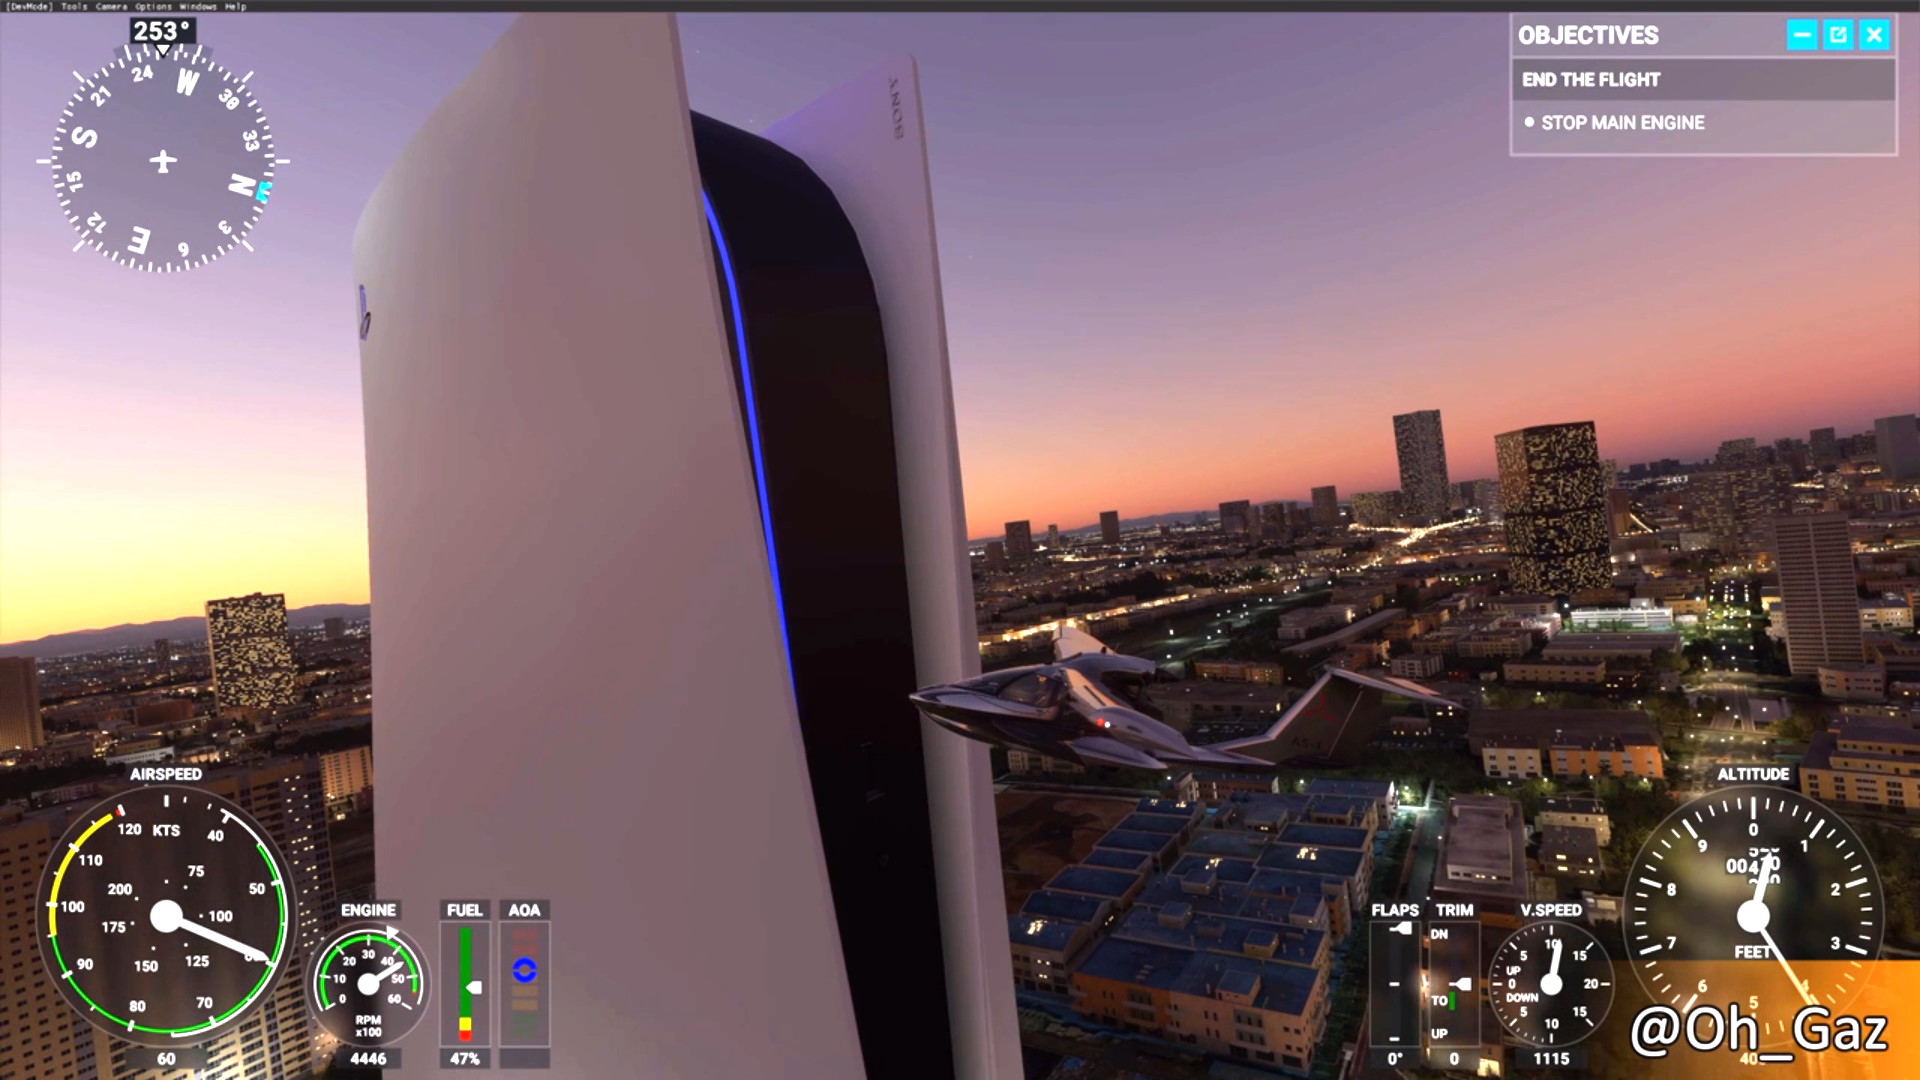 flight simulator 2020 xbox one s